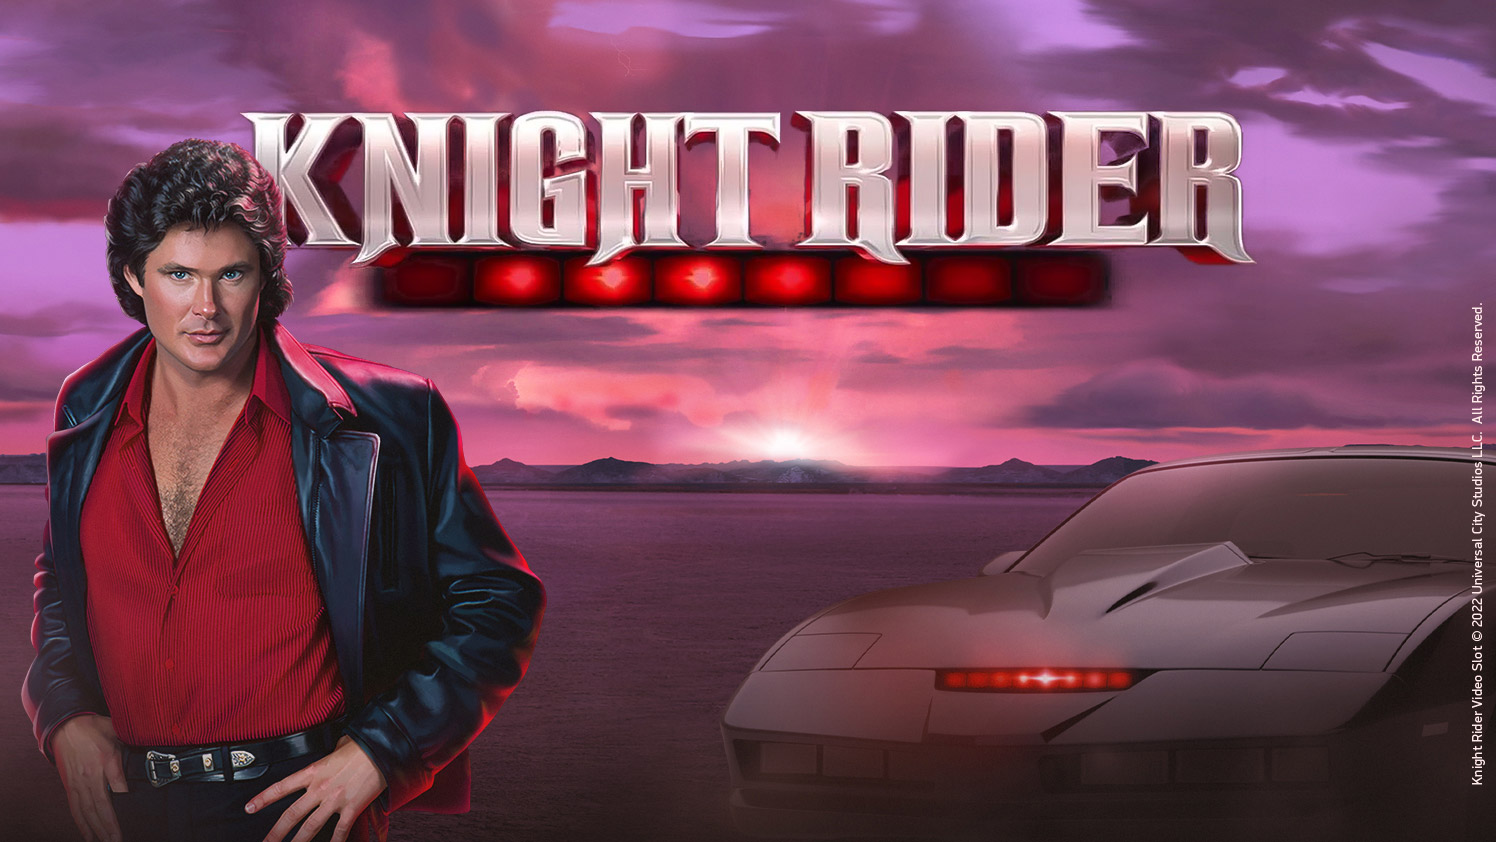 Evolution’s NetEnt launches “Knight Rider” series video slot, starring David Hasselhoff